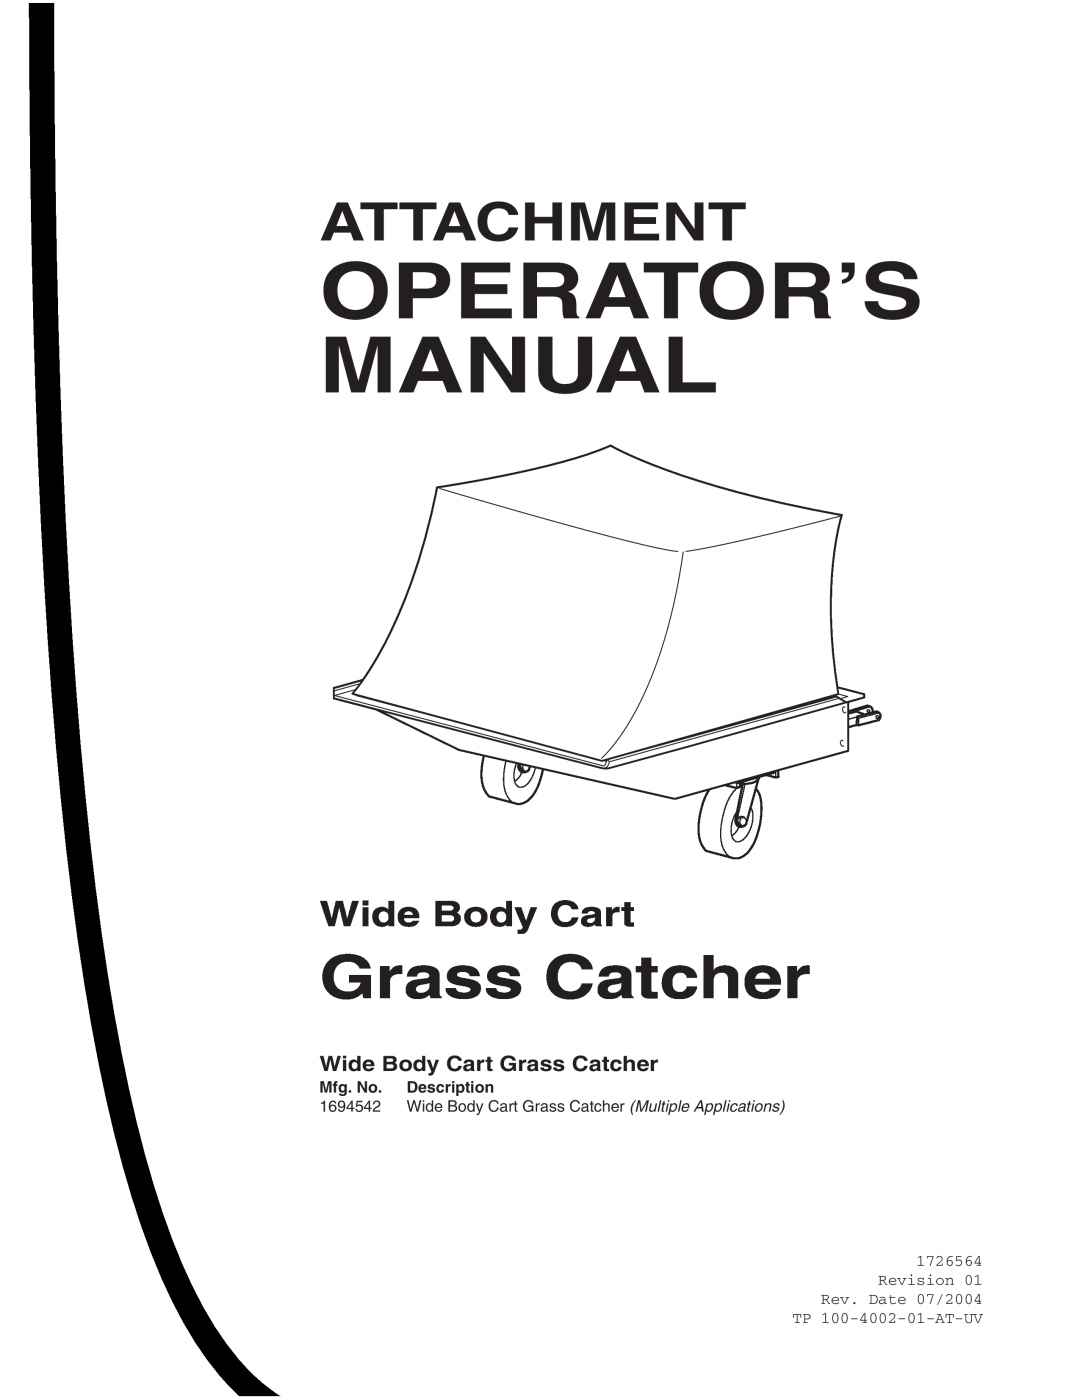 Snapper 1726564, 1694542 manual Attachment, Wide Body Cart Grass Catcher, Operator’S Manual, Mfg. No. Description 